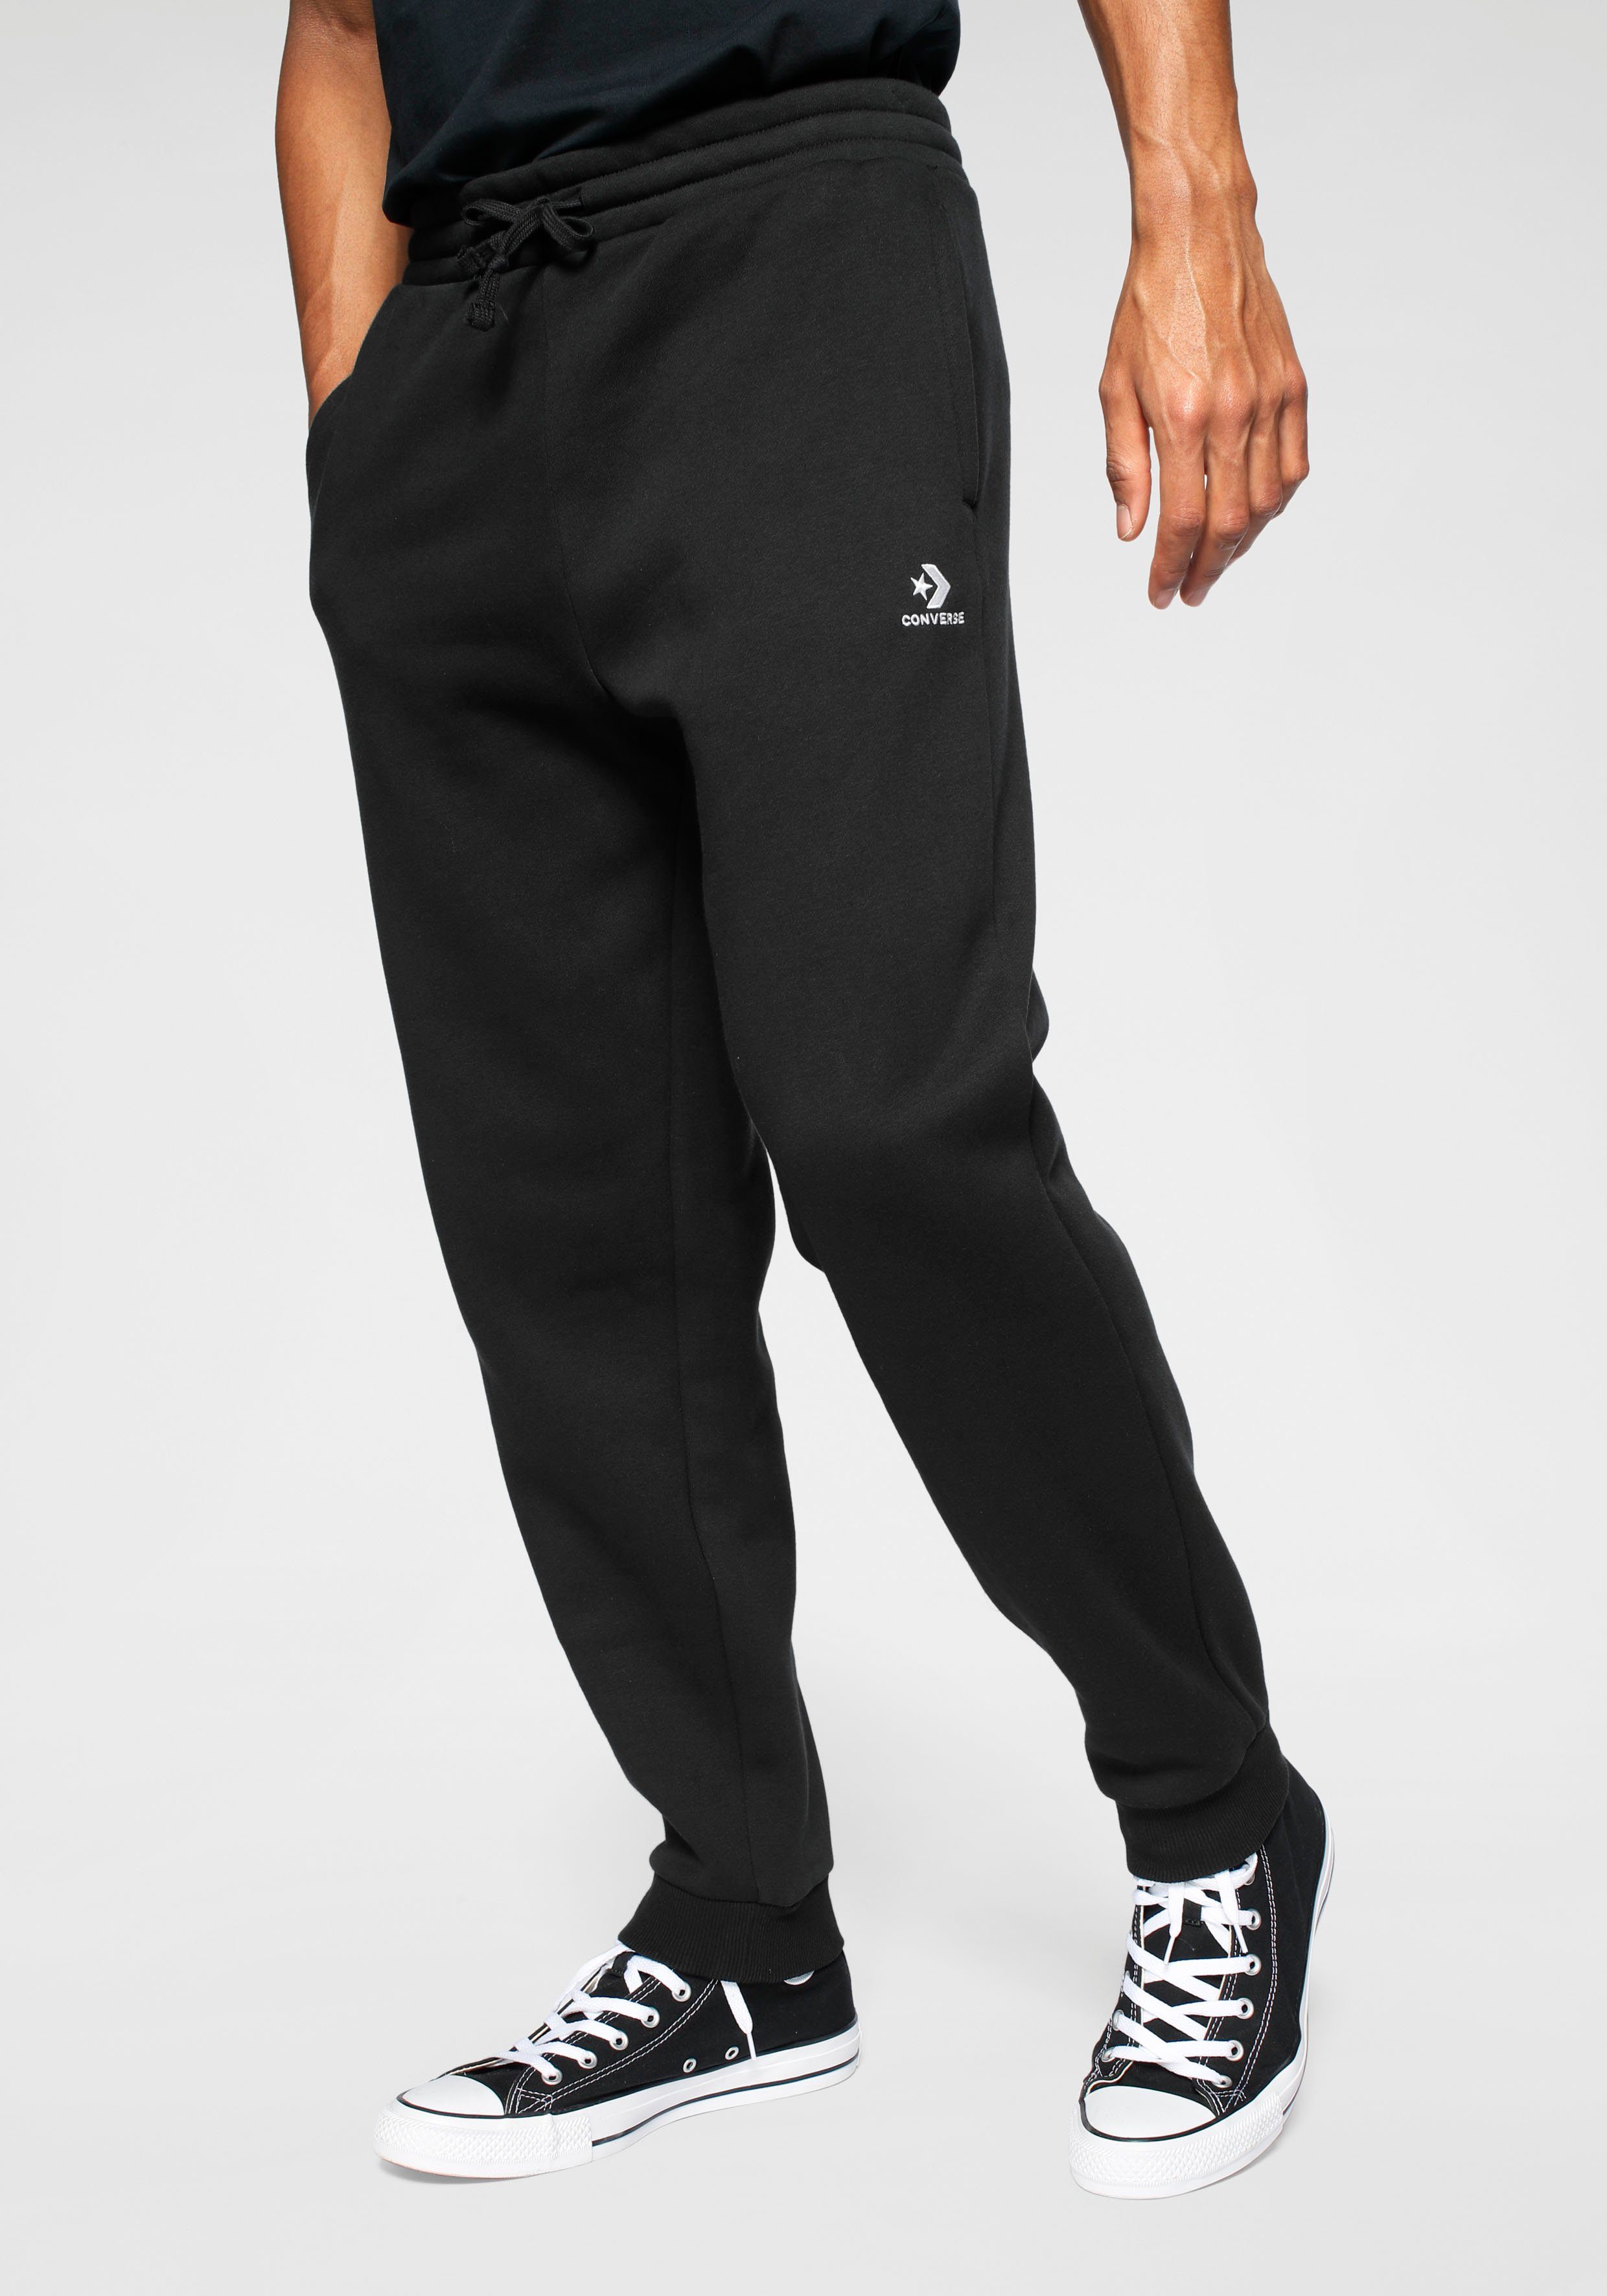 Jogginghosen in schwarz online kaufen » Schwarze Sweatpants | OTTO